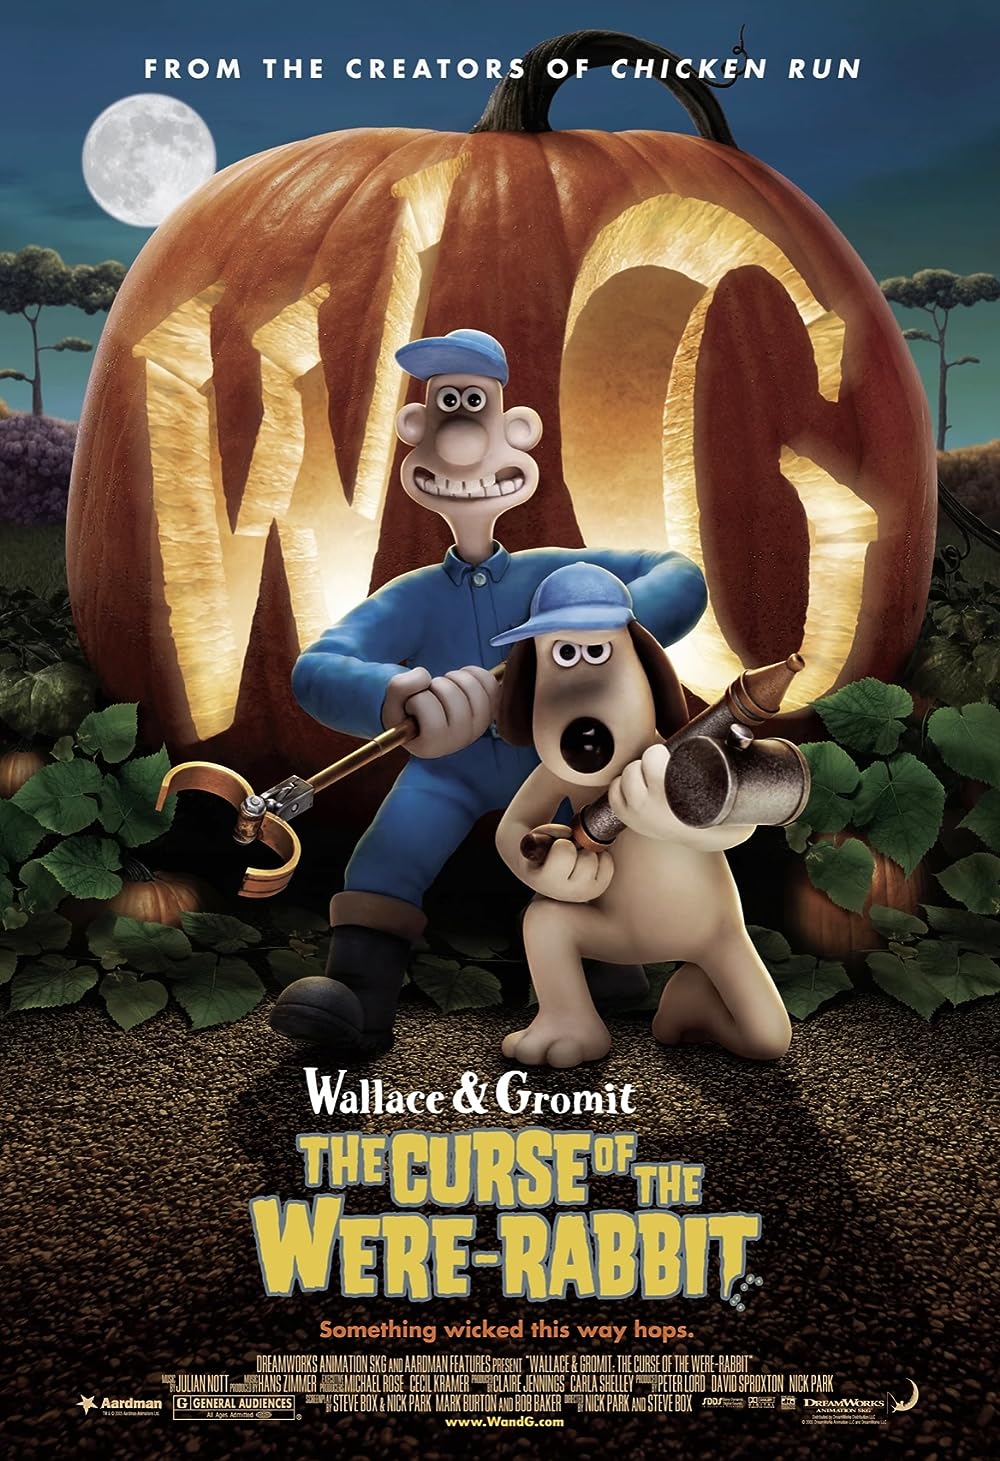 انیمیشن سینمایی والاس و گرومیت: نفرین خرگوشی Wallace & Gromit: The Curse of the Were-Rabbit